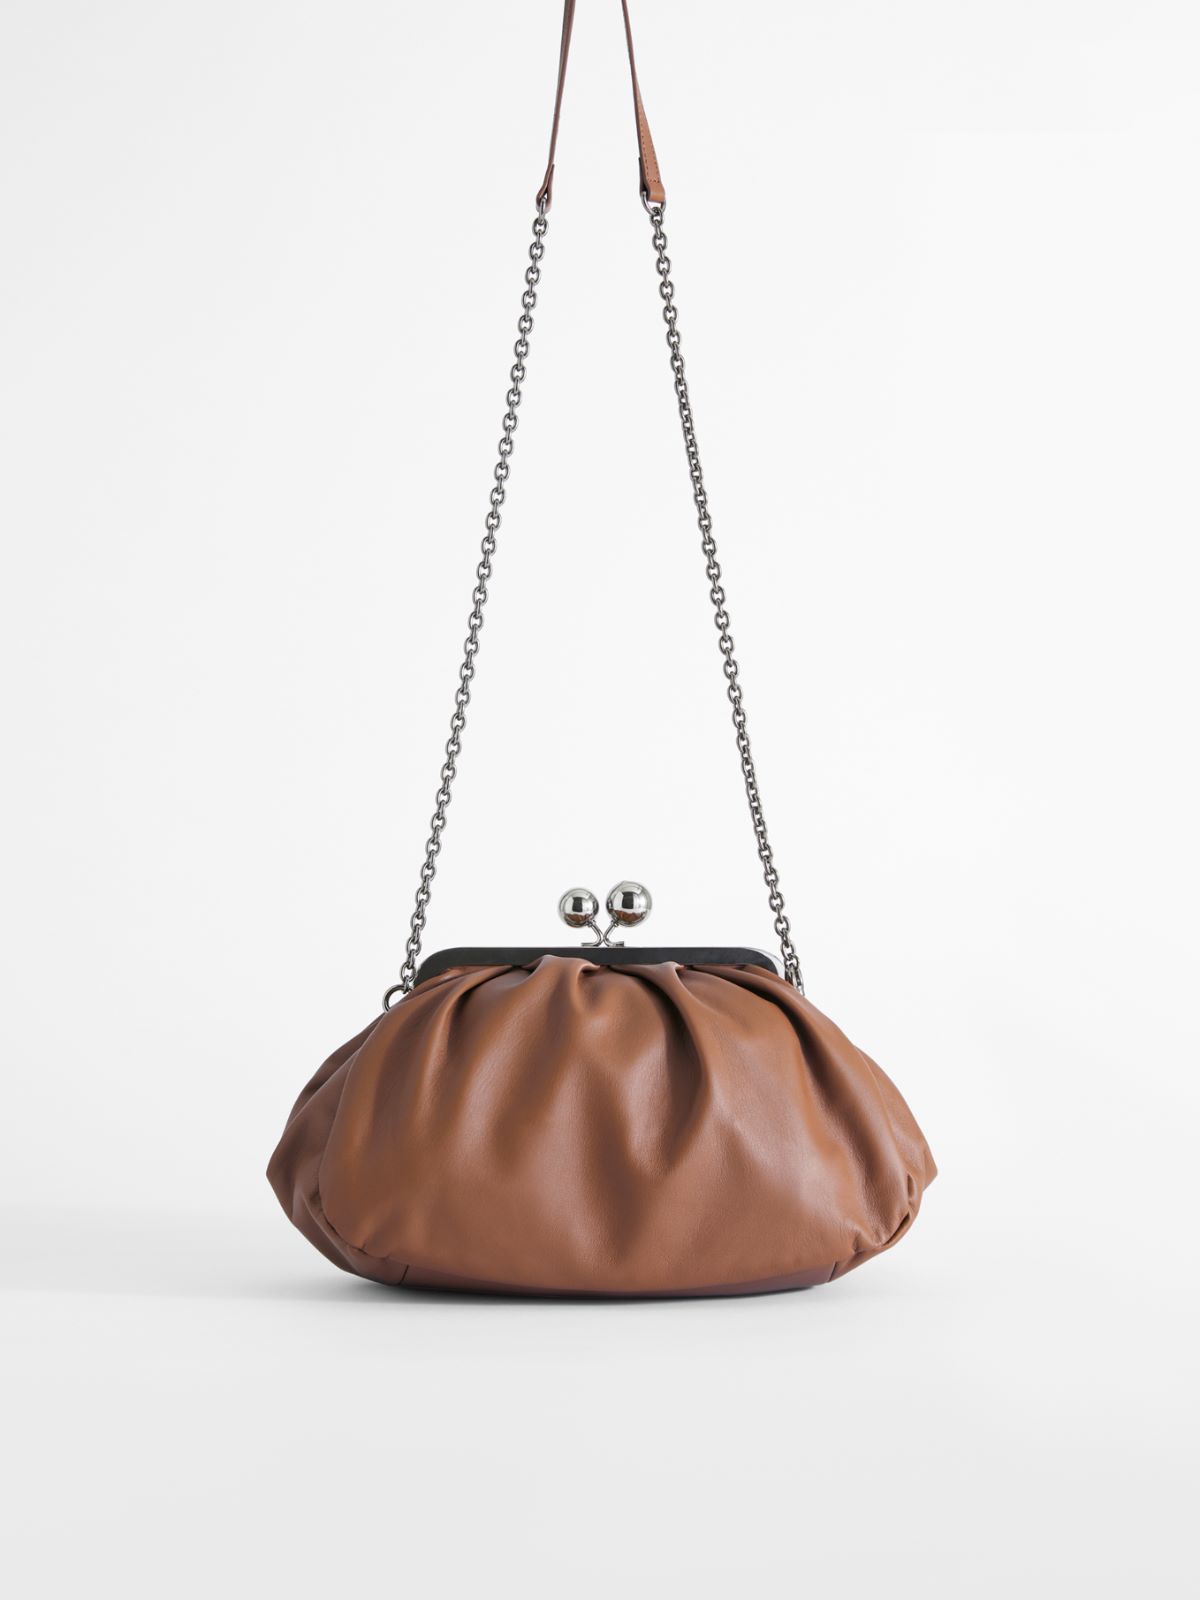 Medium leather Pasticcino Bag - TOBACCO - Weekend Max Mara - 3